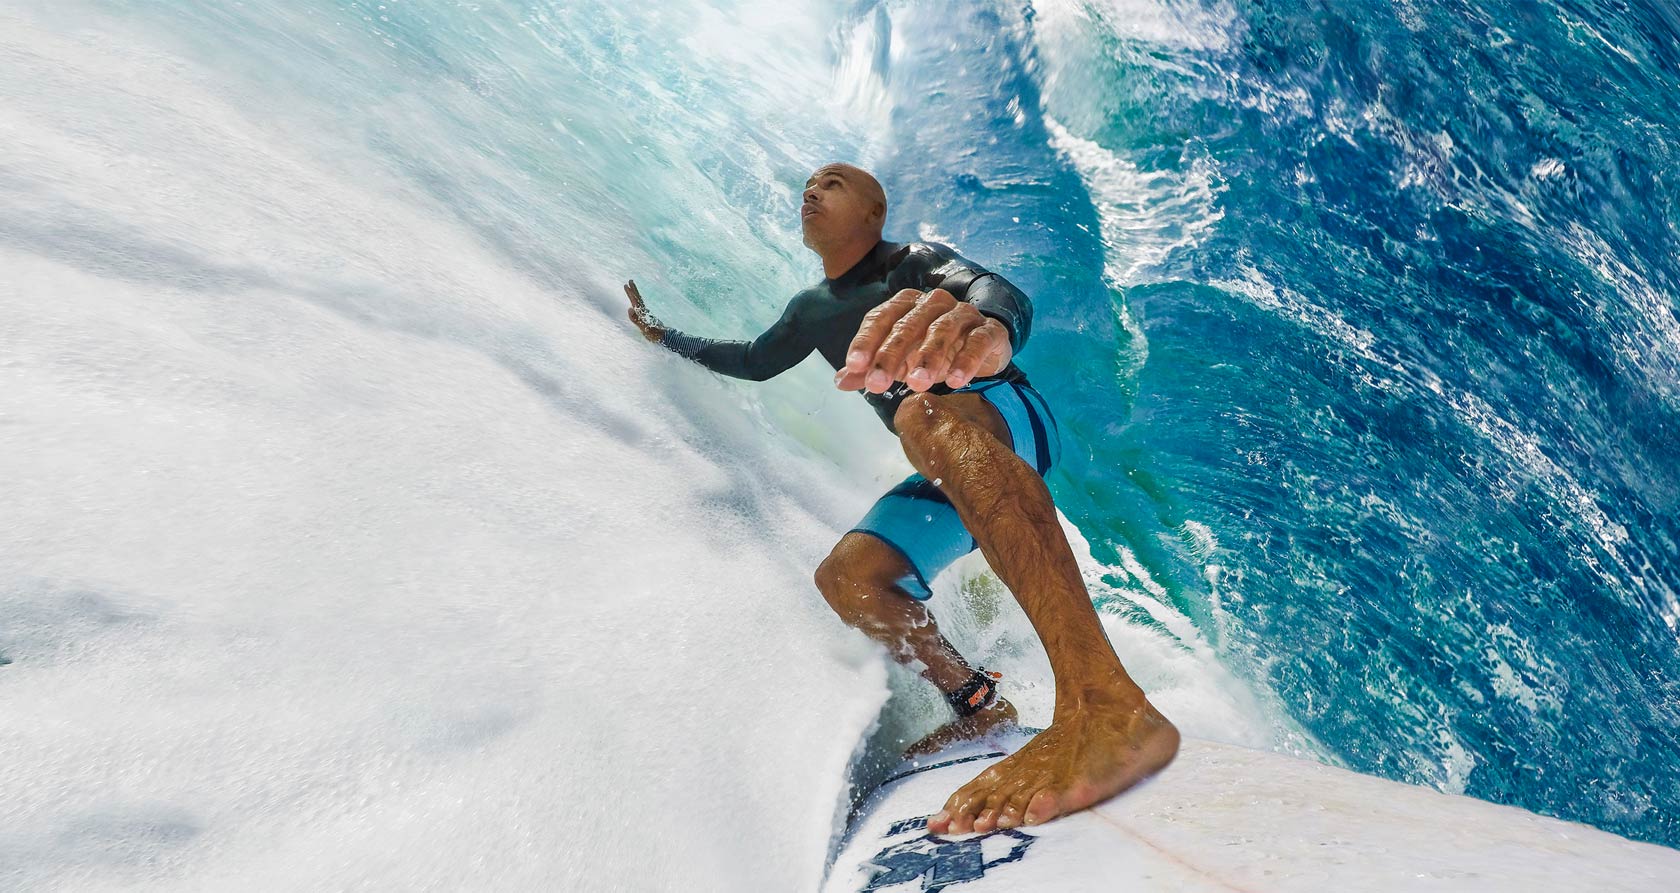 GoPro HERO Session Surf Shots